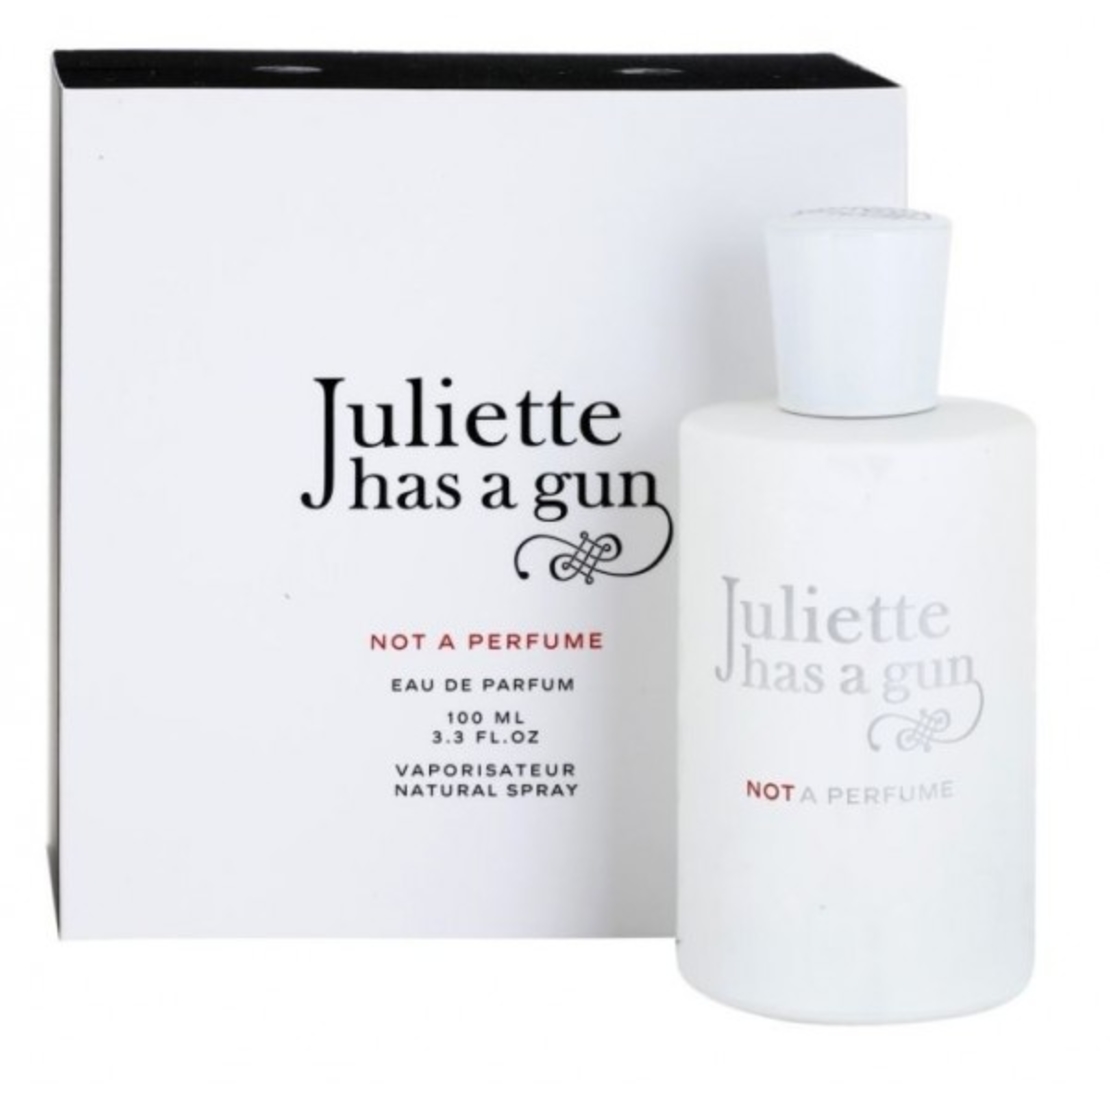 בושם לאשה ג'ולייט האז א גאן נוט א פרפיום Juliette Has a Gun Not a Perfume EDP 100 ML